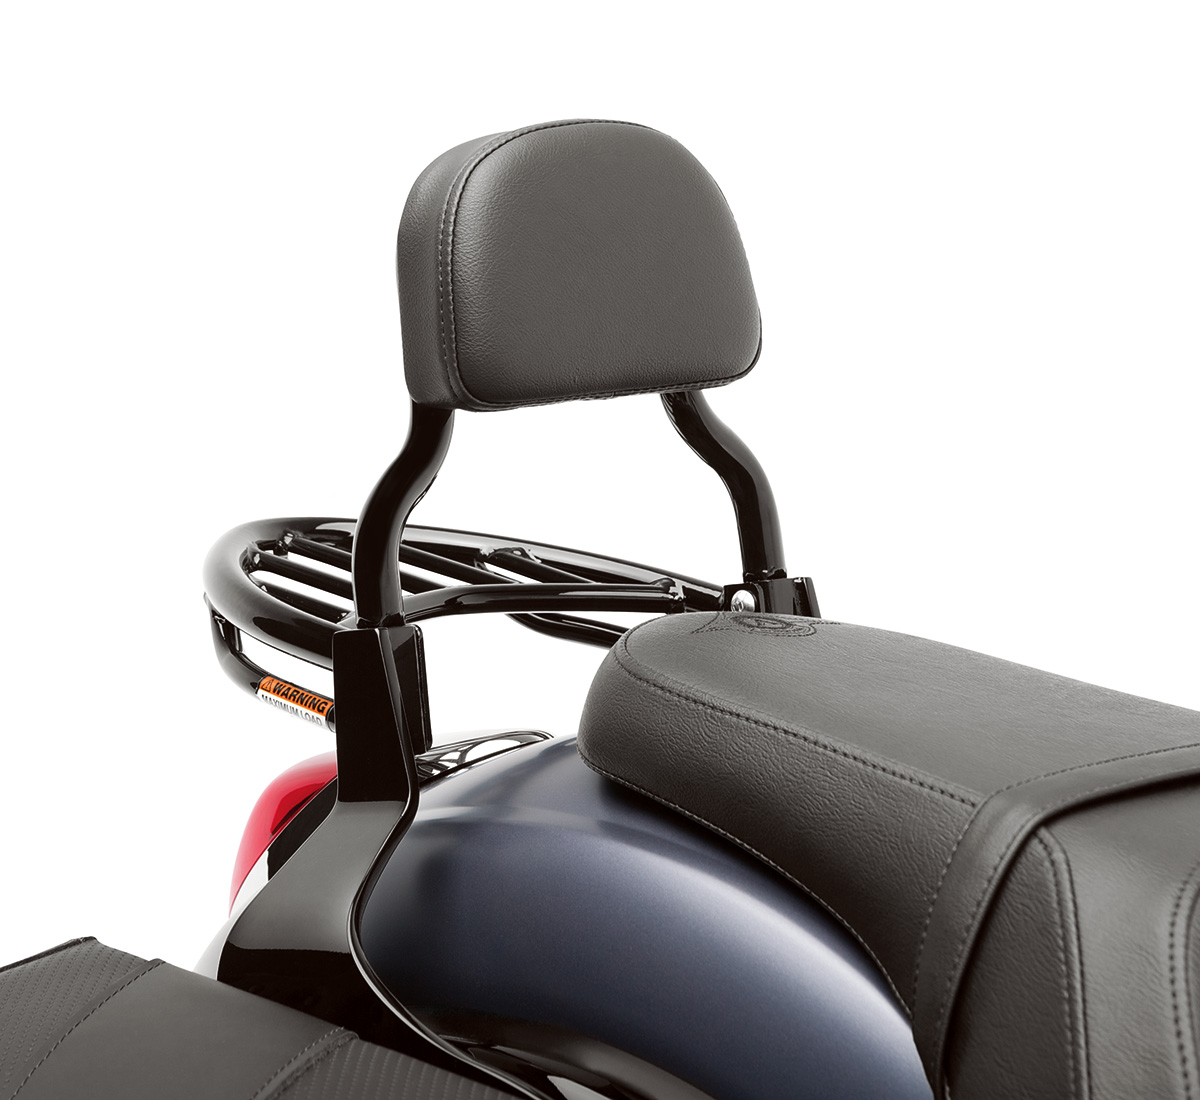 MotorFansClub Sissy Bar Backrest Luggage Rear Rack Passenger Back Seat Cushion For Compatible With Kawasaki Vulcan 900 VN900 1996-2018 Black 